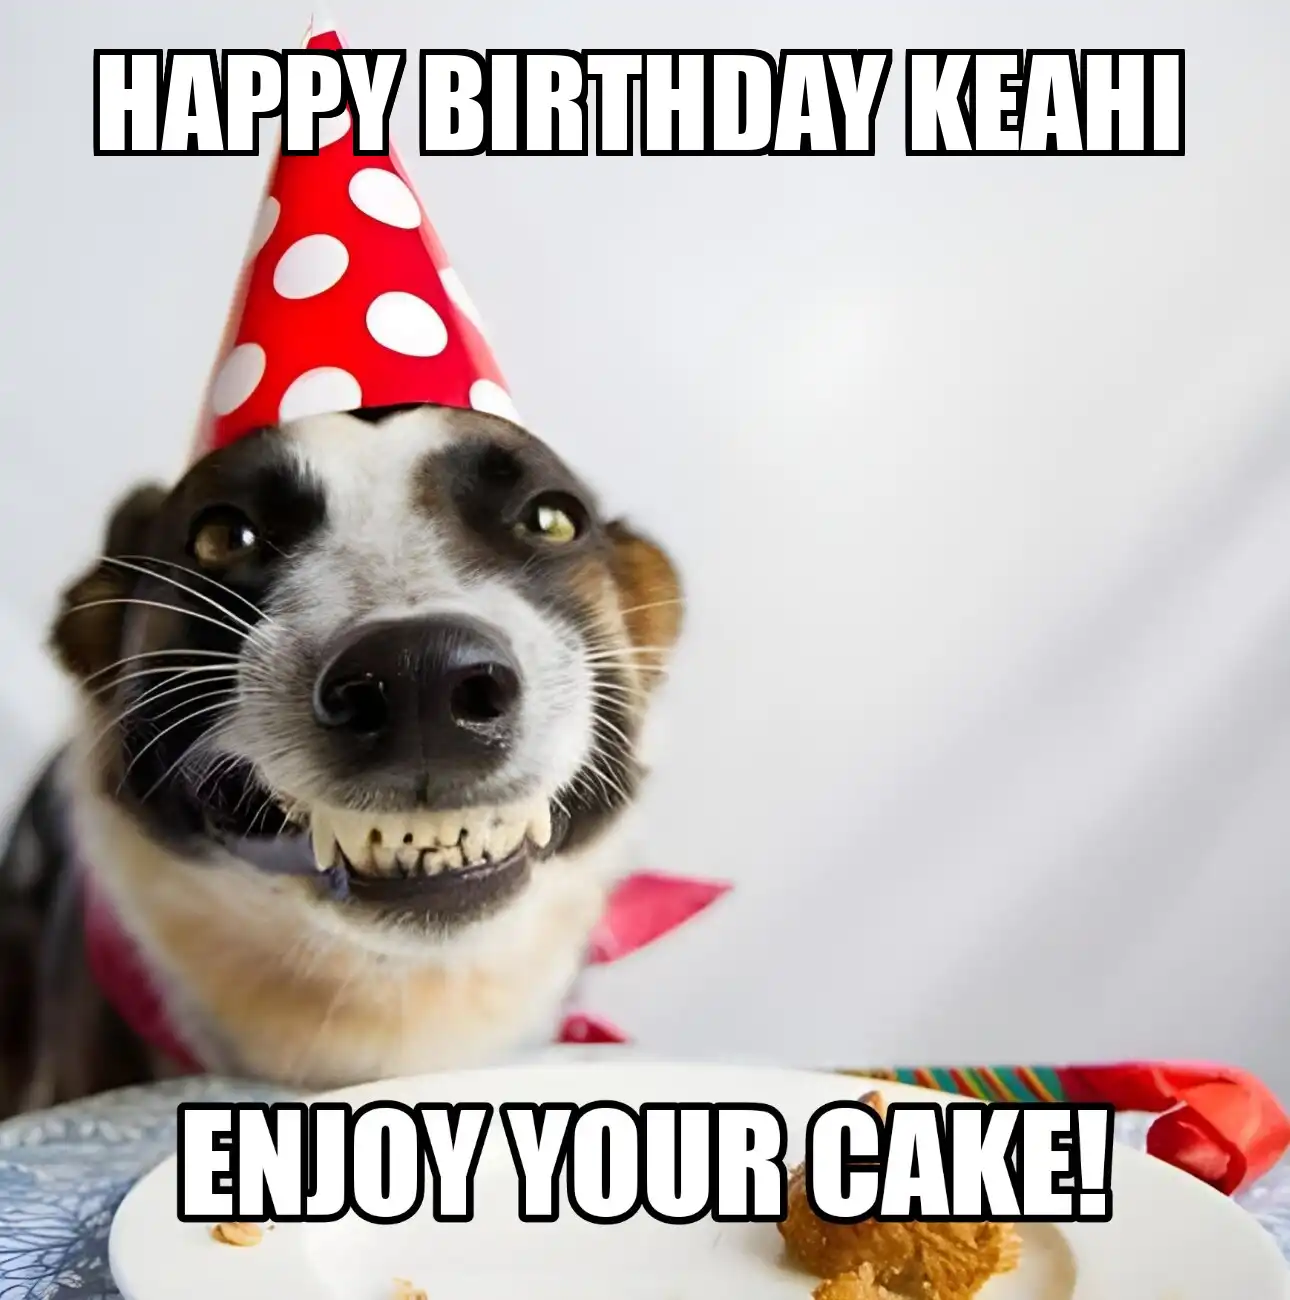 Happy Birthday Keahi Enjoy Your Cake Dog Meme